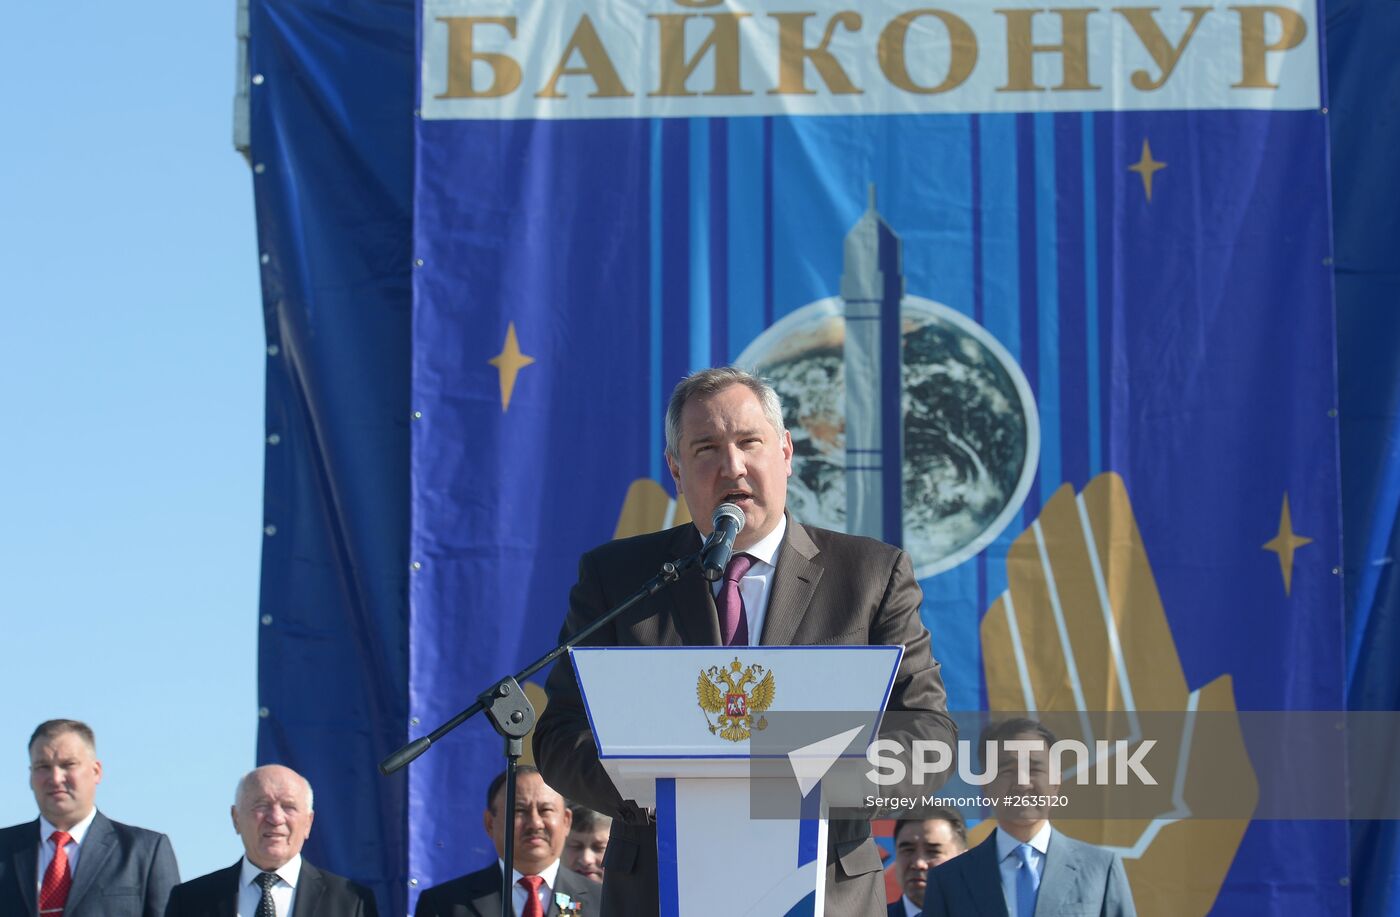 Celebrating 60th anniversary of Baikonur Space Center